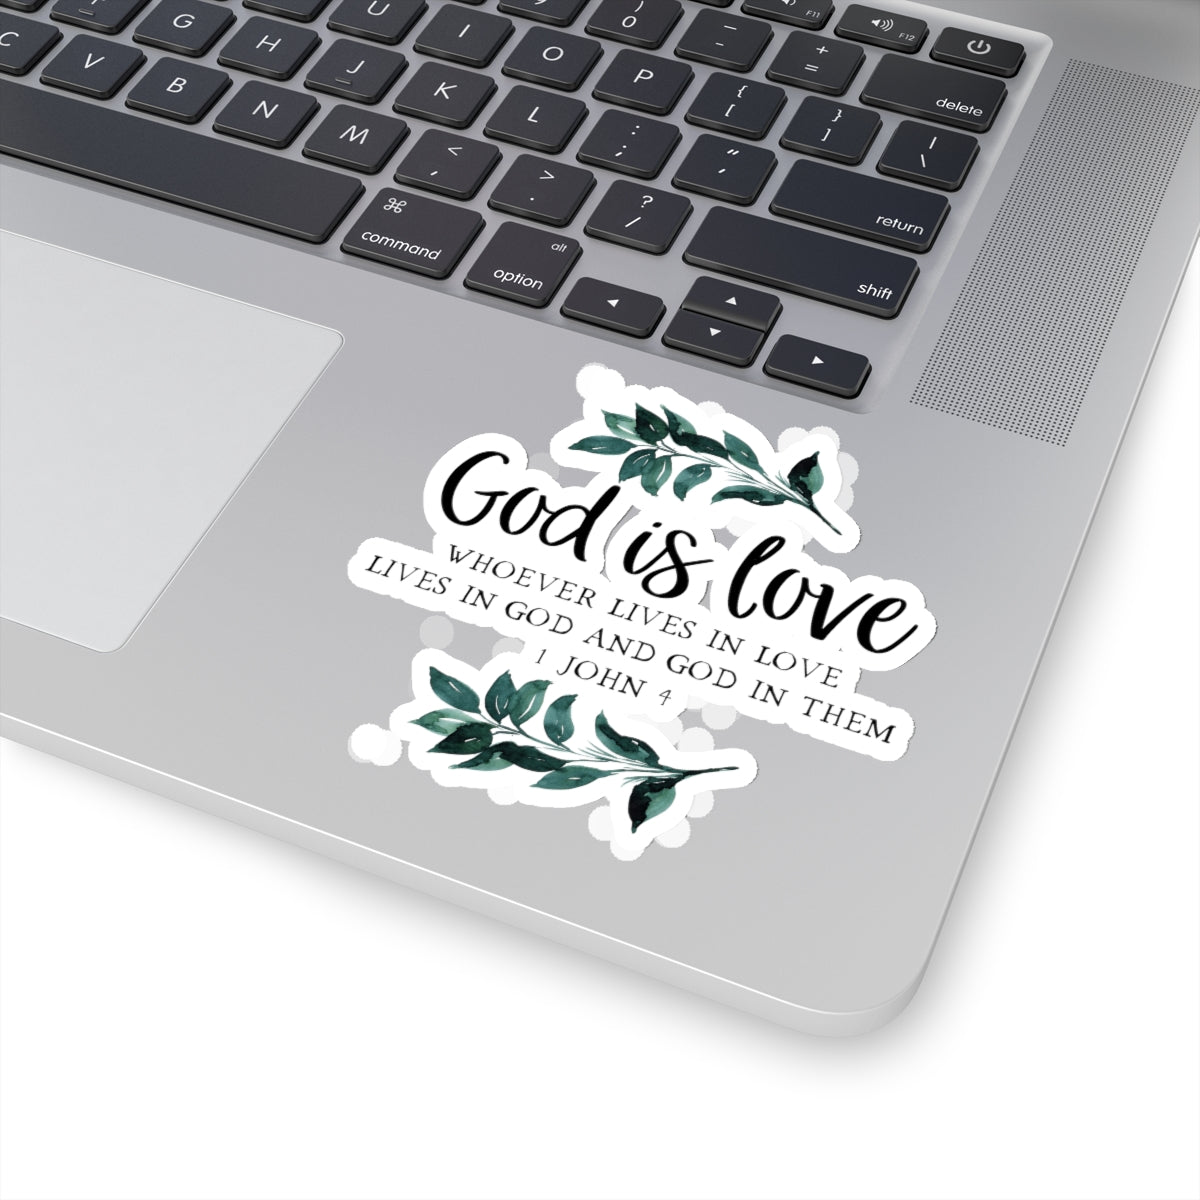 God is Love Sticker